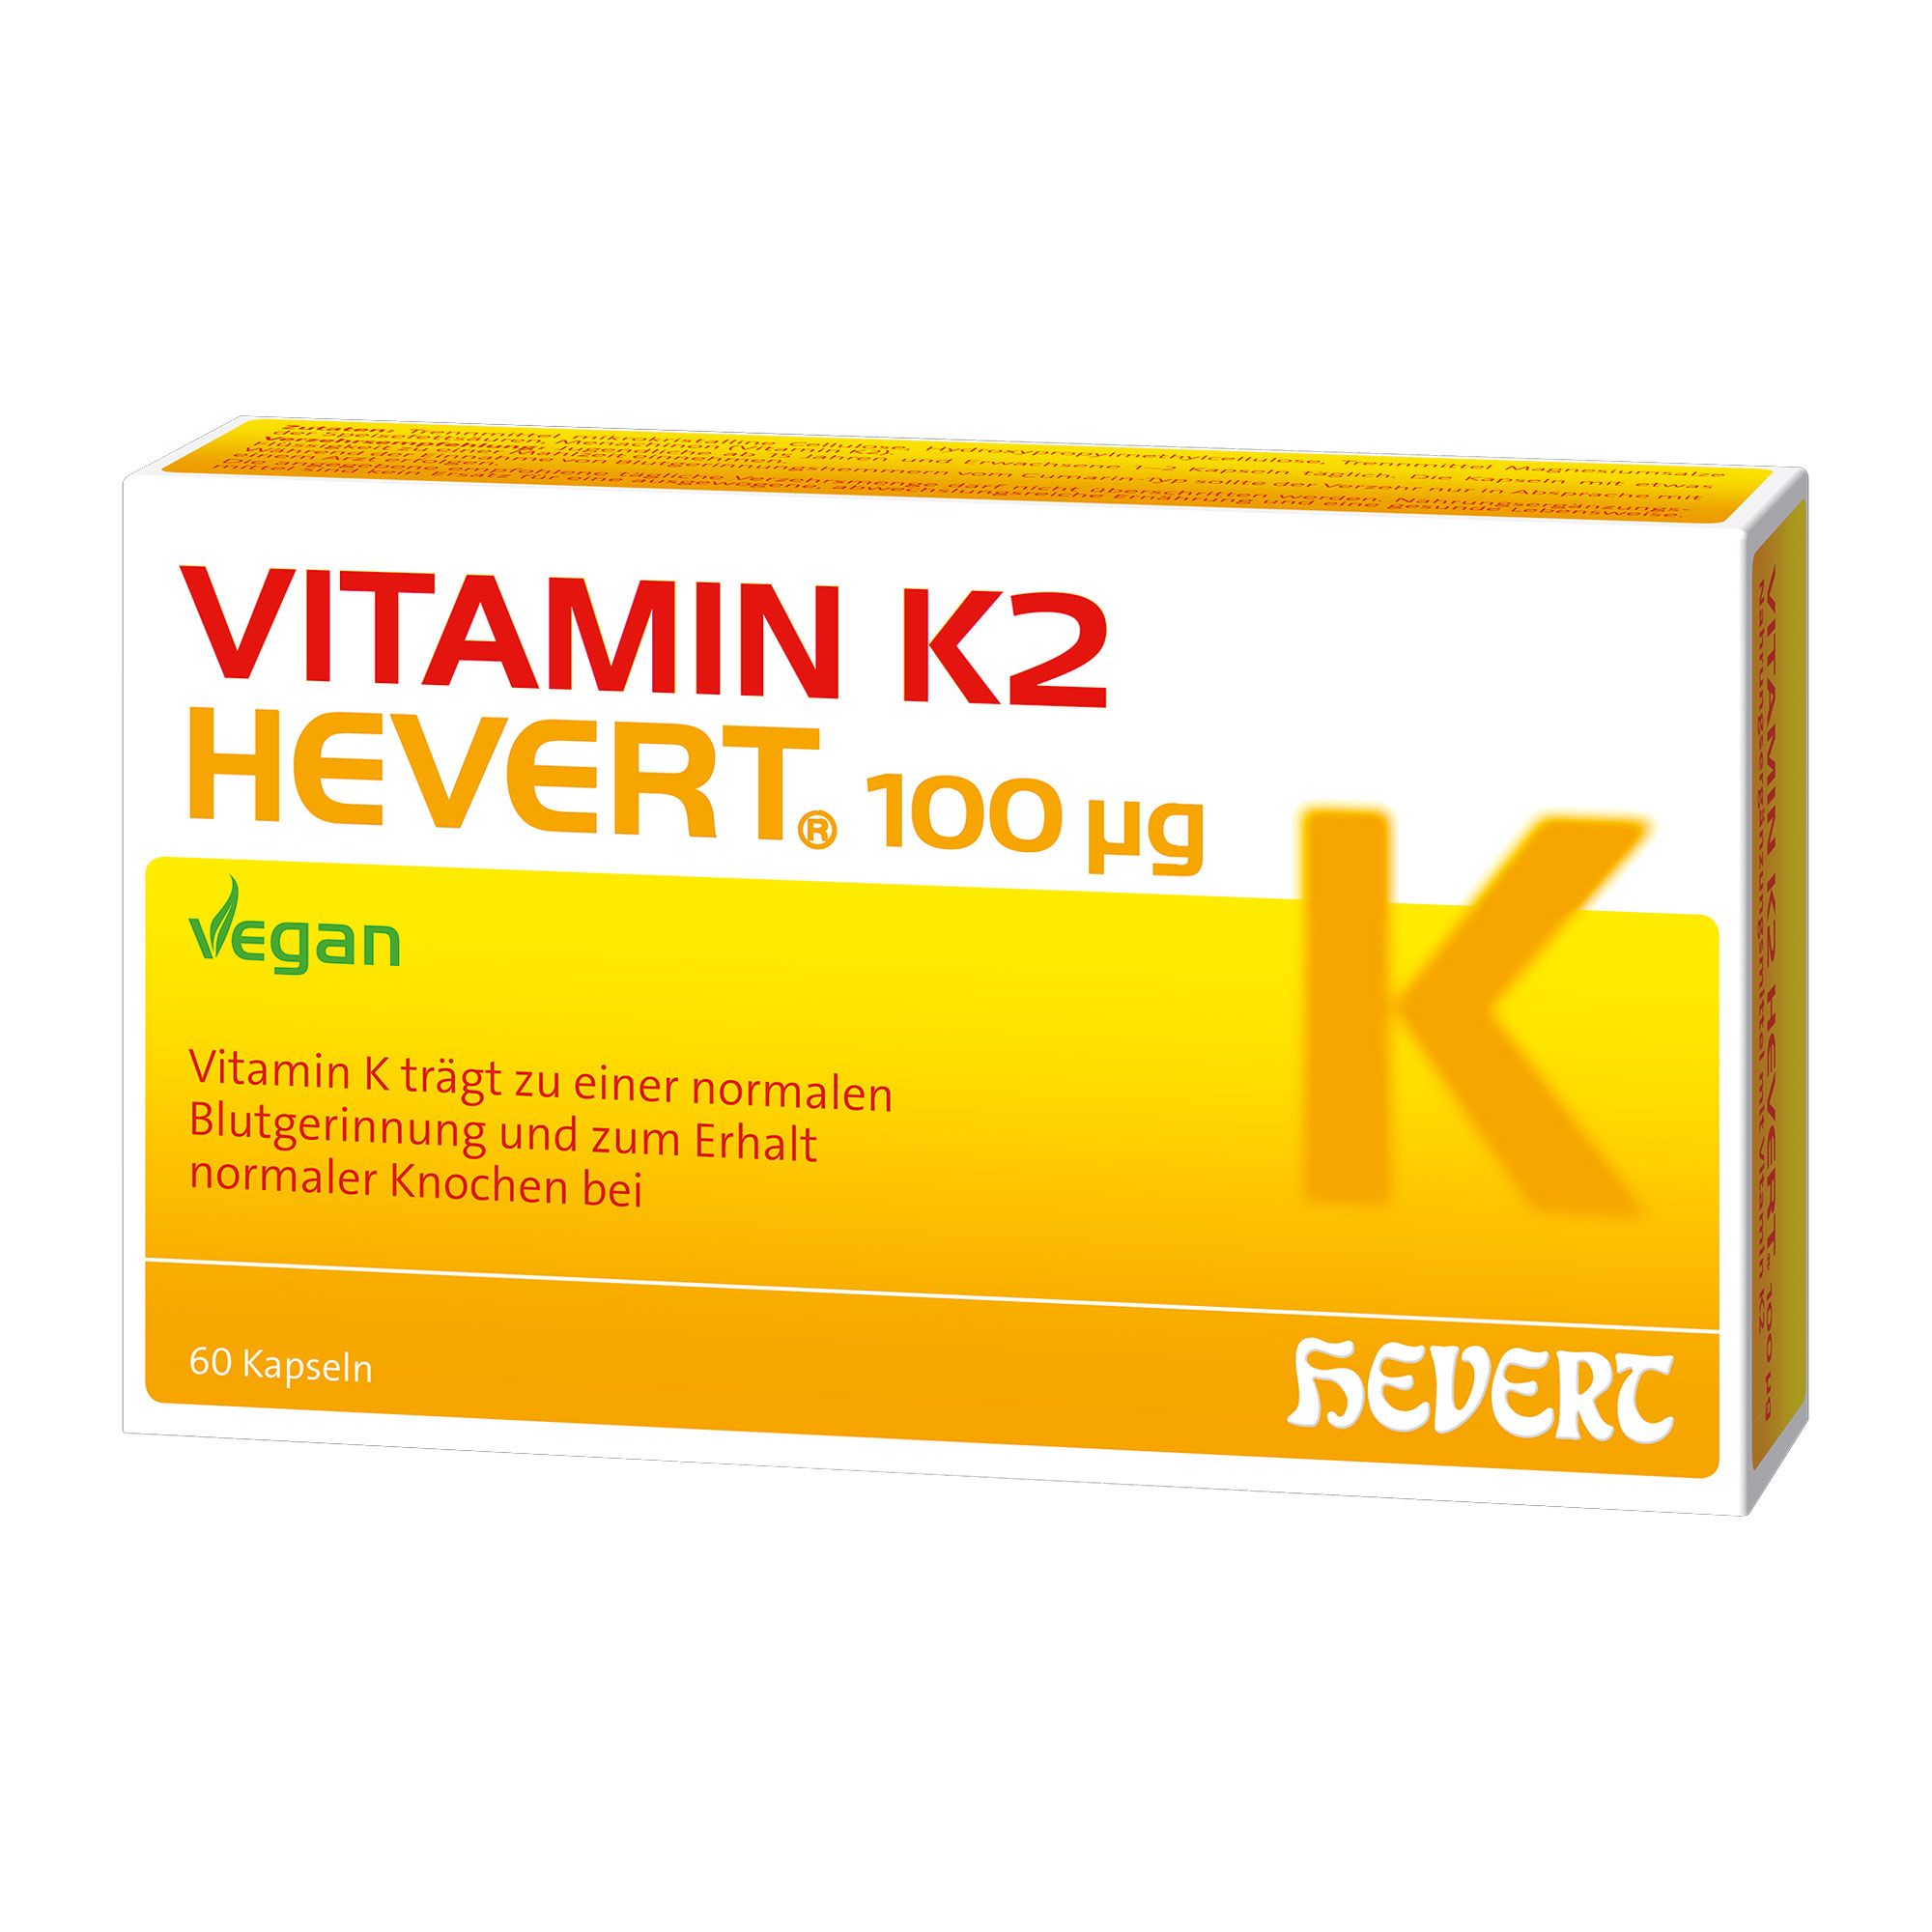 Nahrungsergänzungsmittel mit Vitamin K2. Vegan.